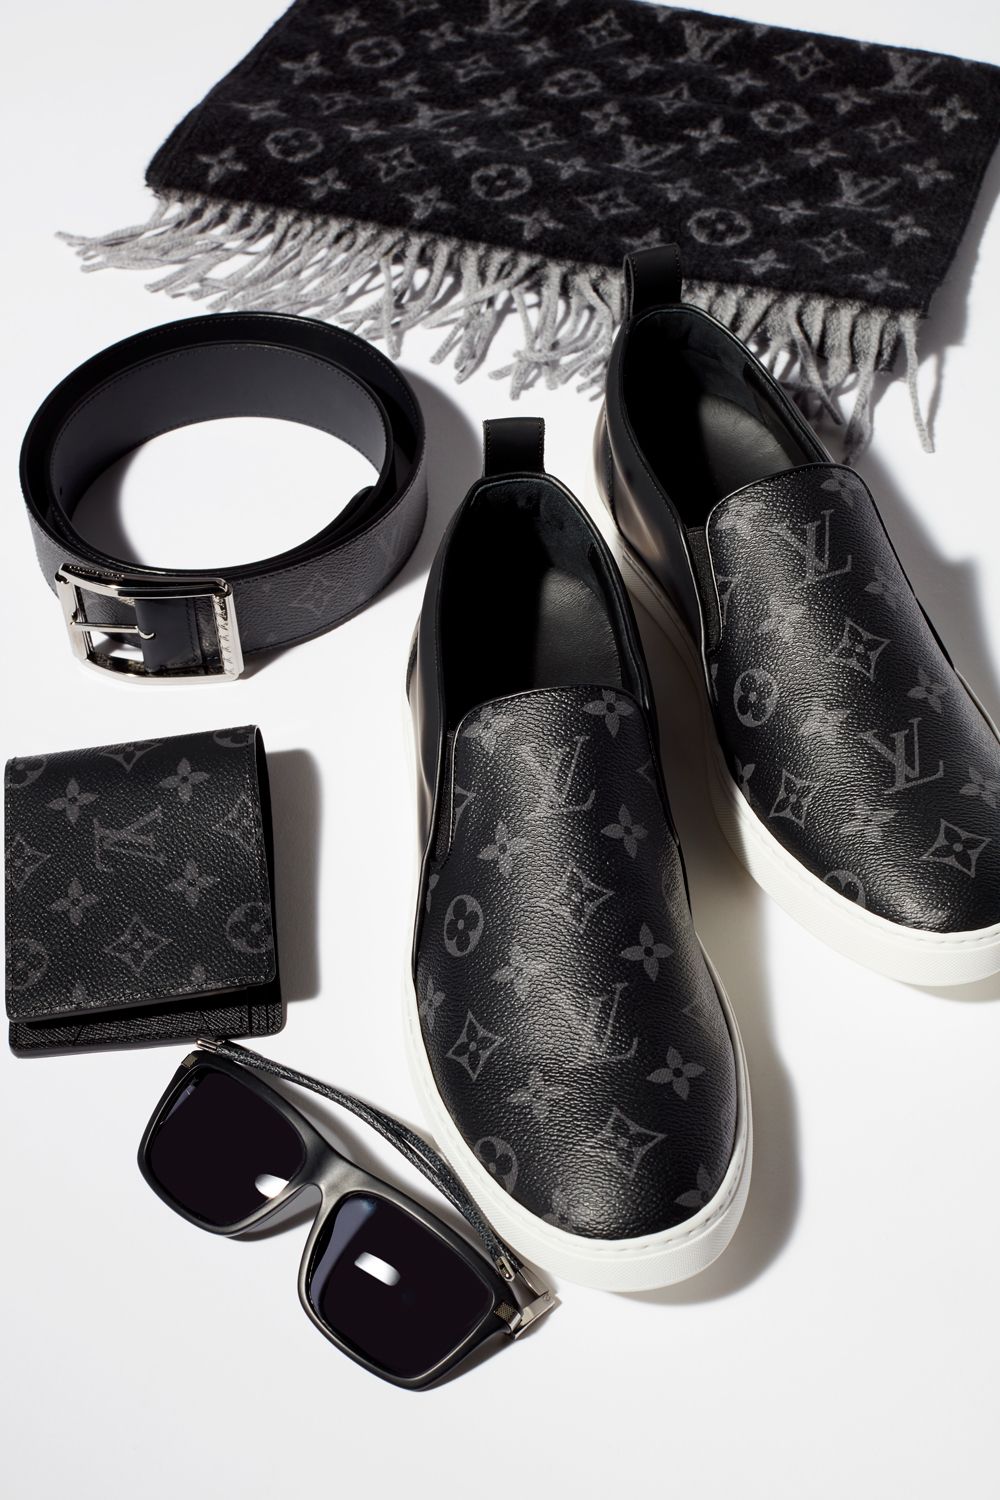 Louis Vuitton Trocadero Slip-on in Black for Men